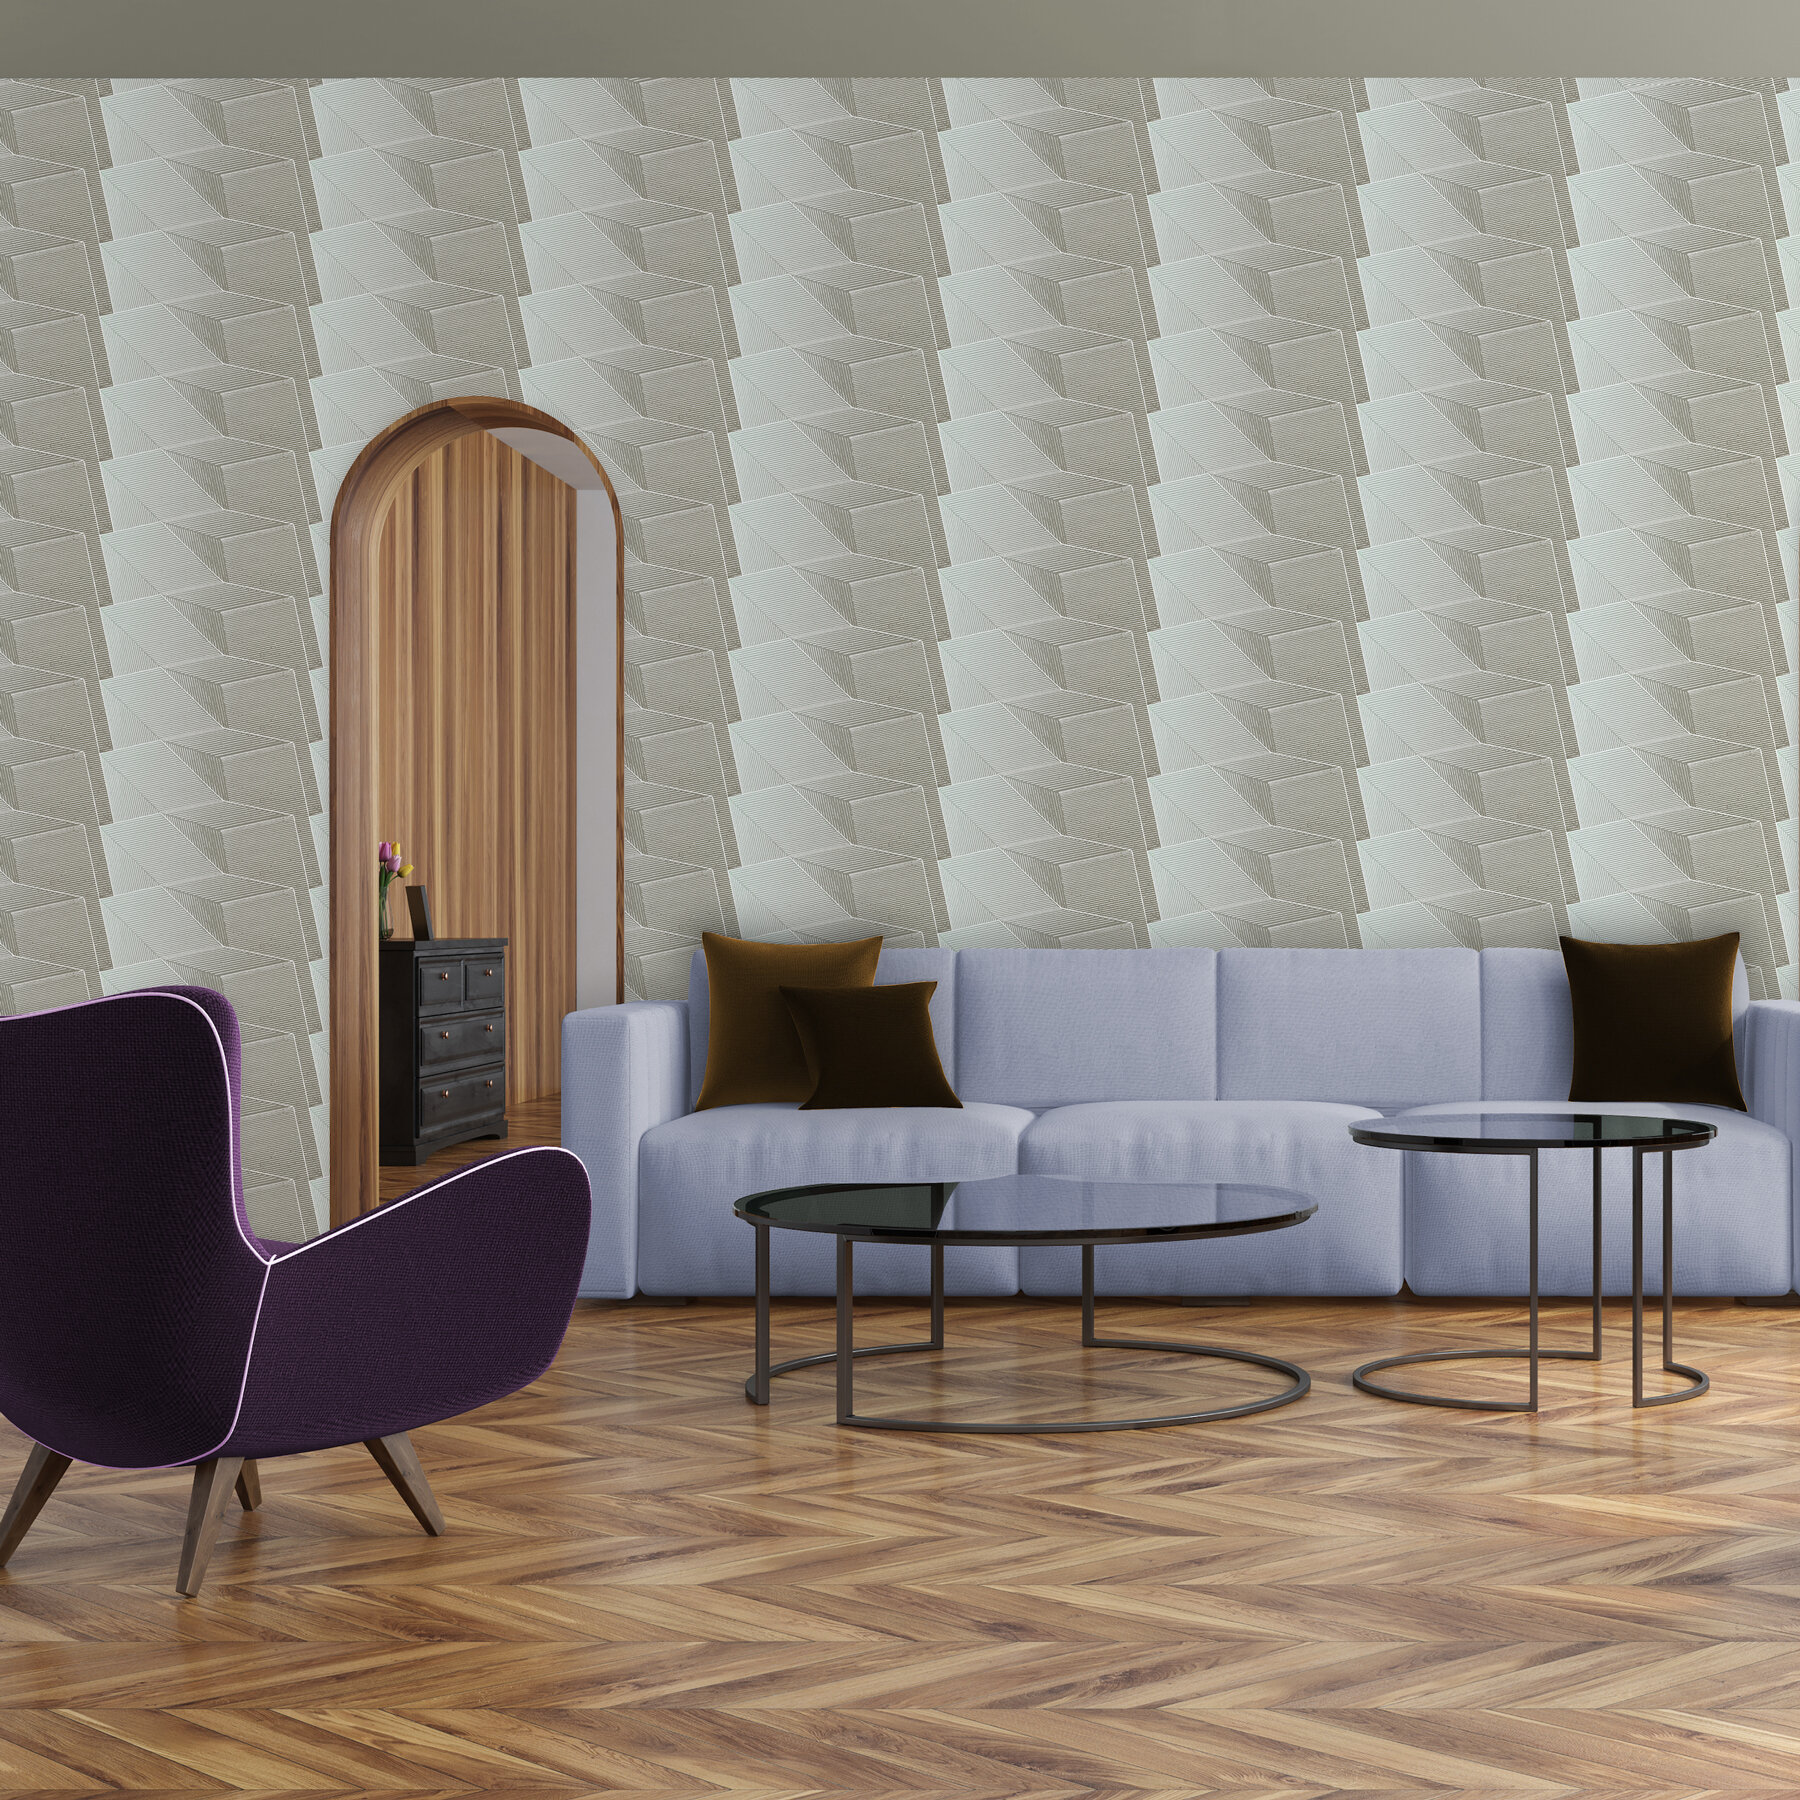 Euclid - White Sand, Geometric Wallpaper, Lounge, Sofa